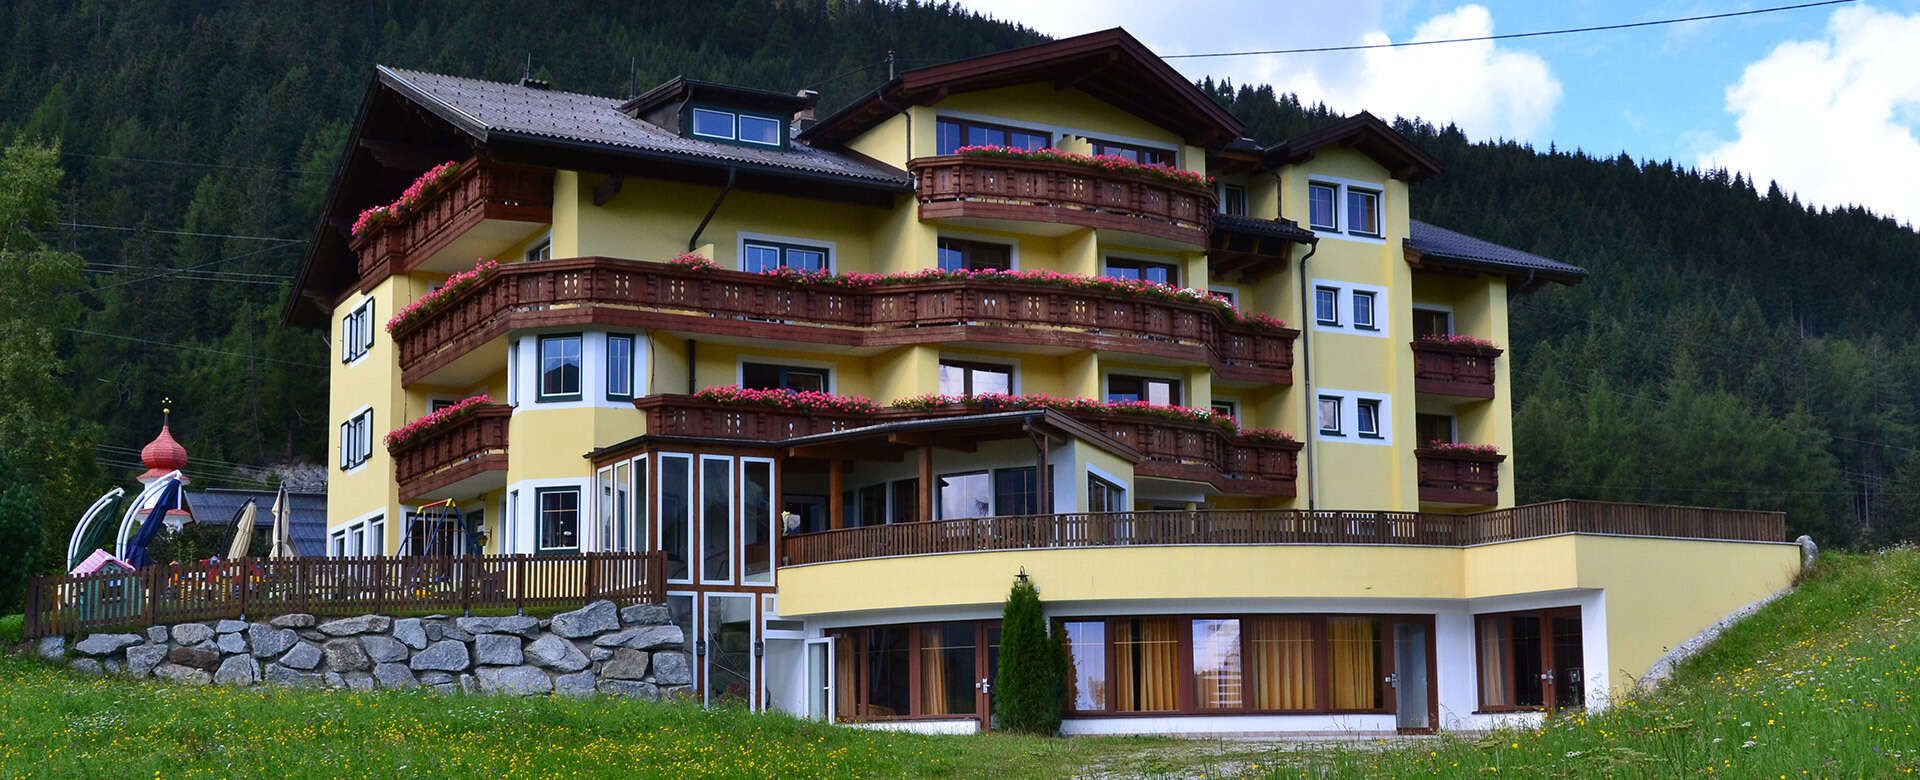 Hotel-Restaurant Humlerhof in Gries am Brenner, Tyrol